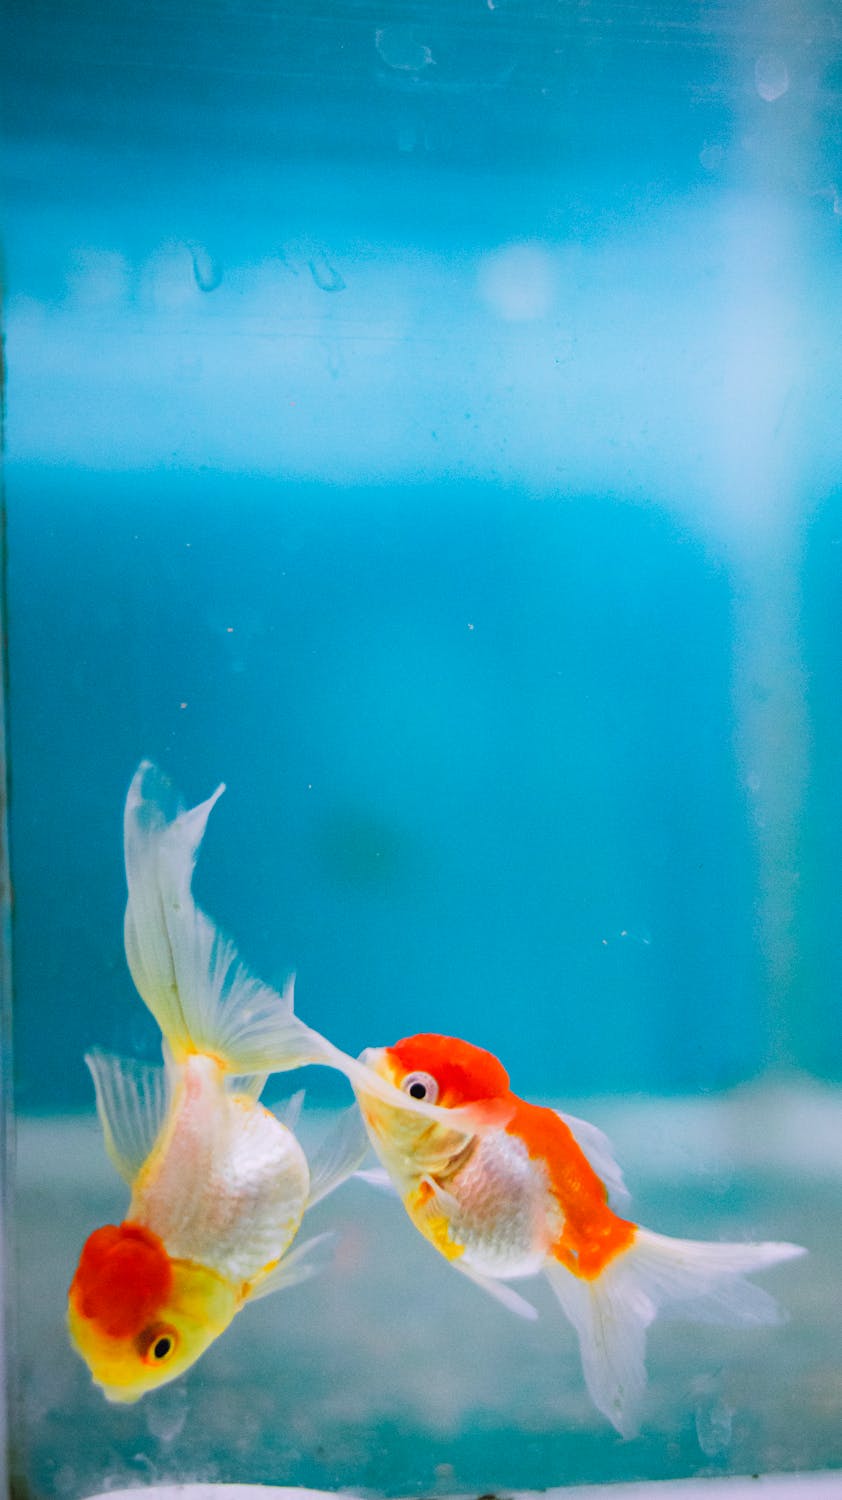 Goldfish swimming in pure water of aquarium · Free Stock Photo